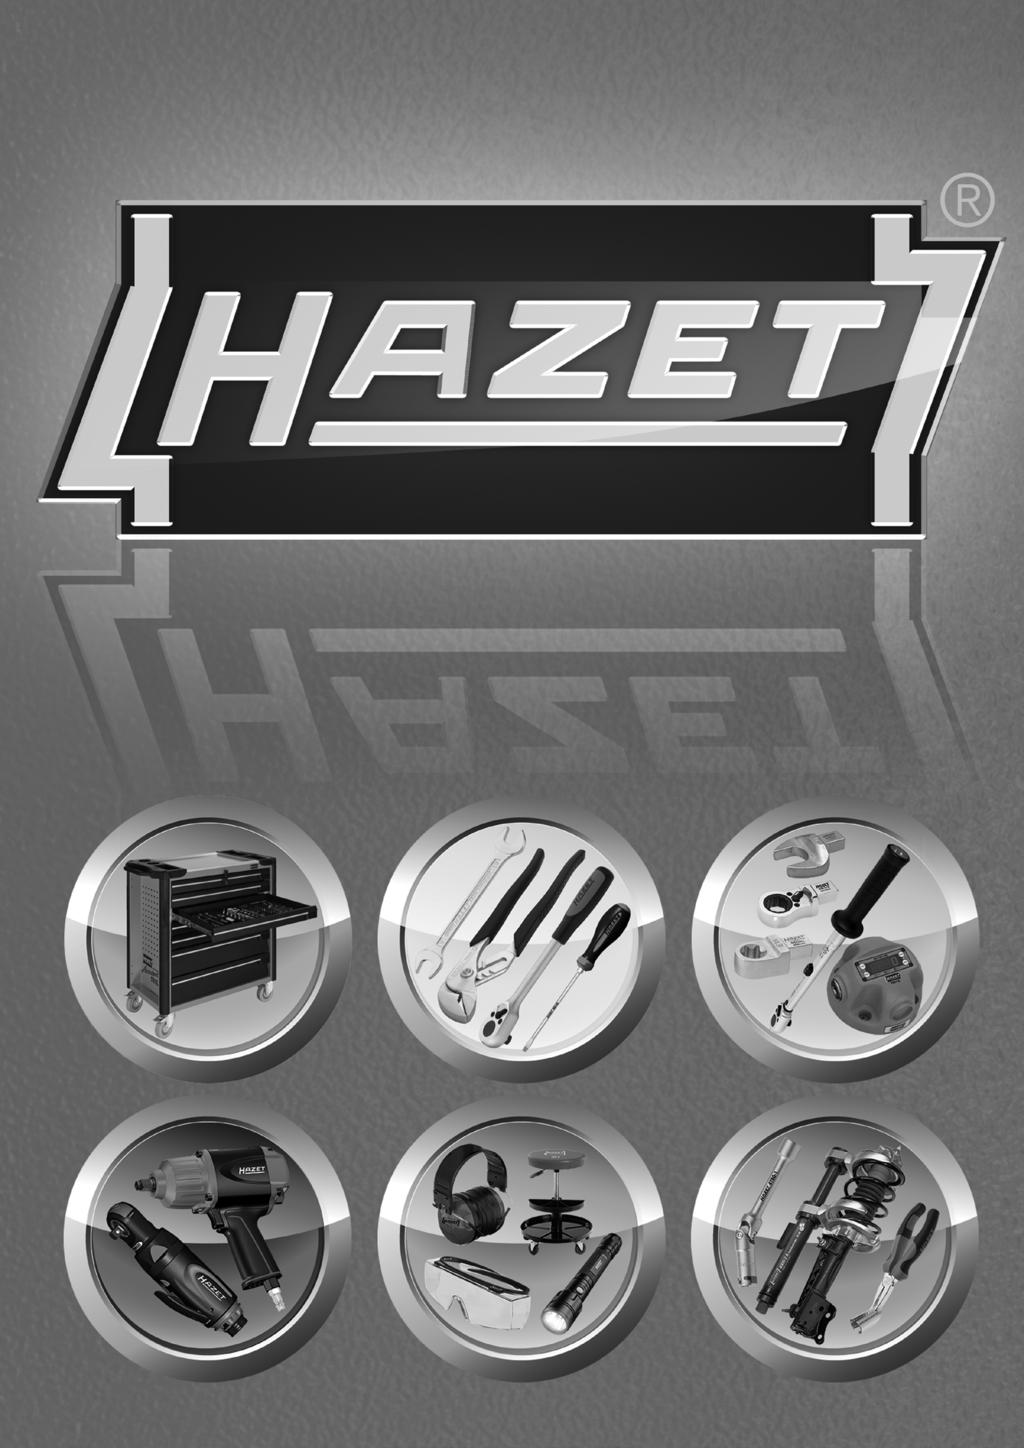 HAZET-WERK Hermann Zerver GmbH & Co.